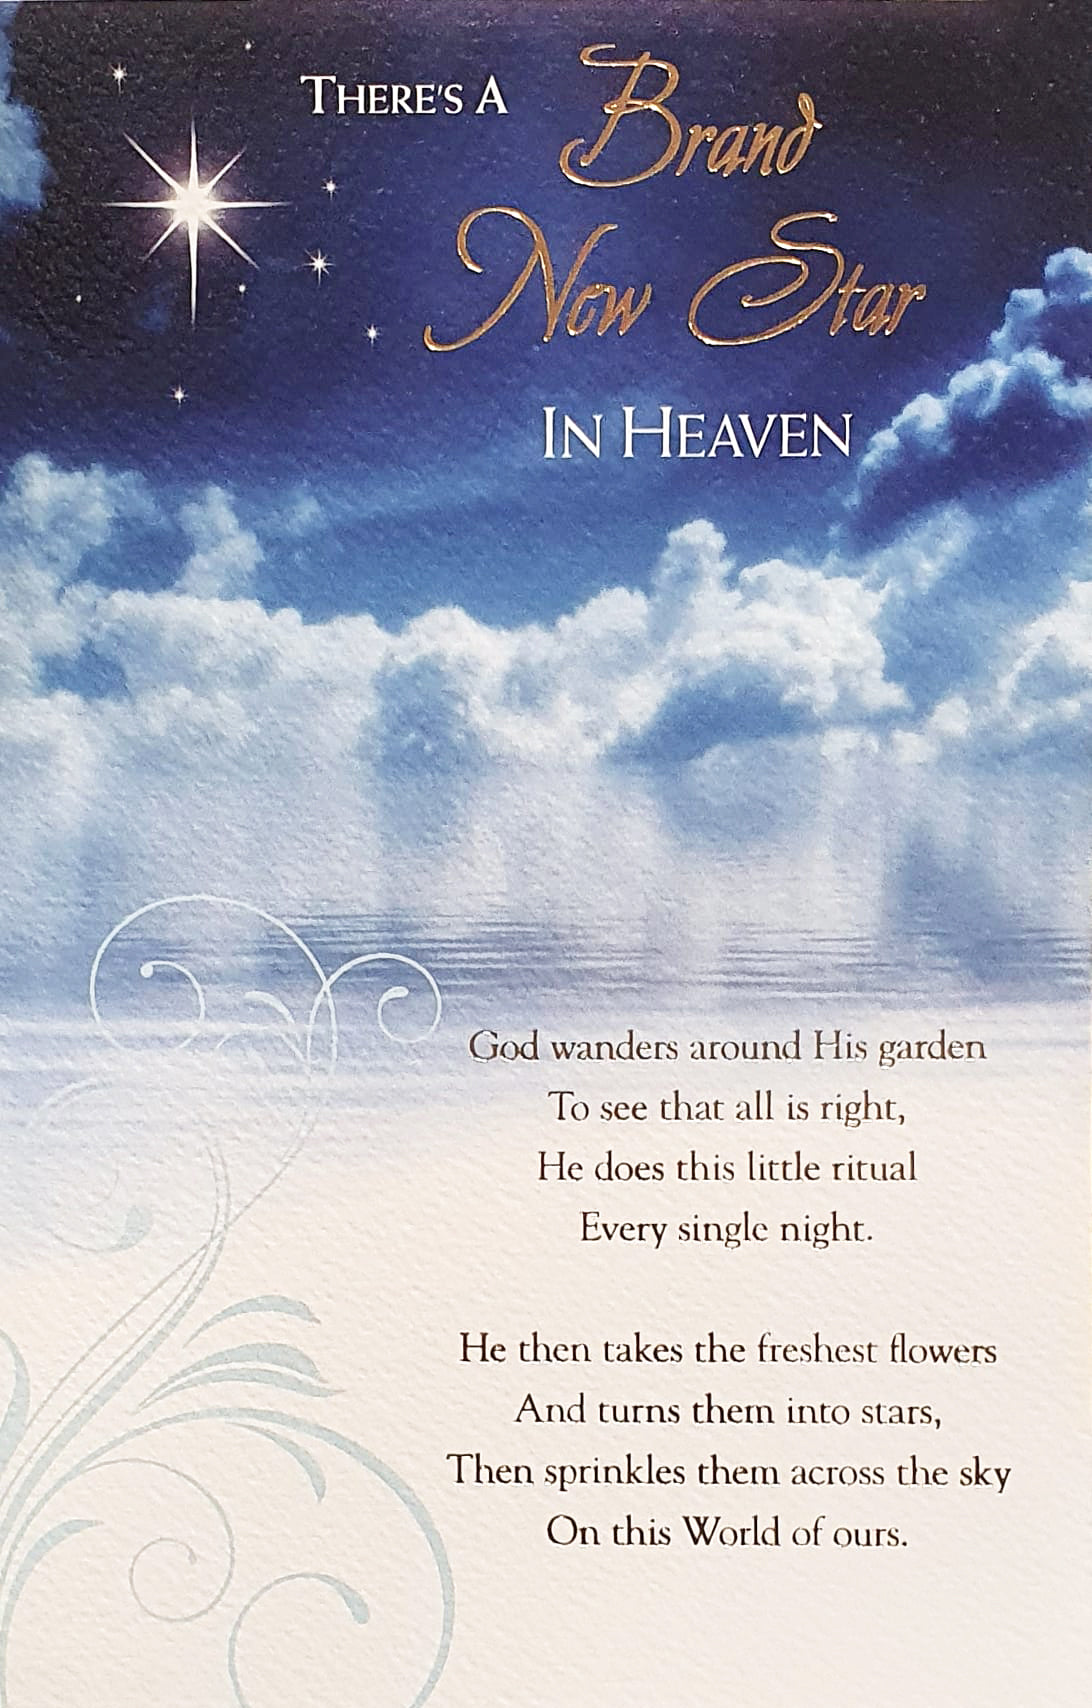 Sympathy Card - Brand New Star In Heaven